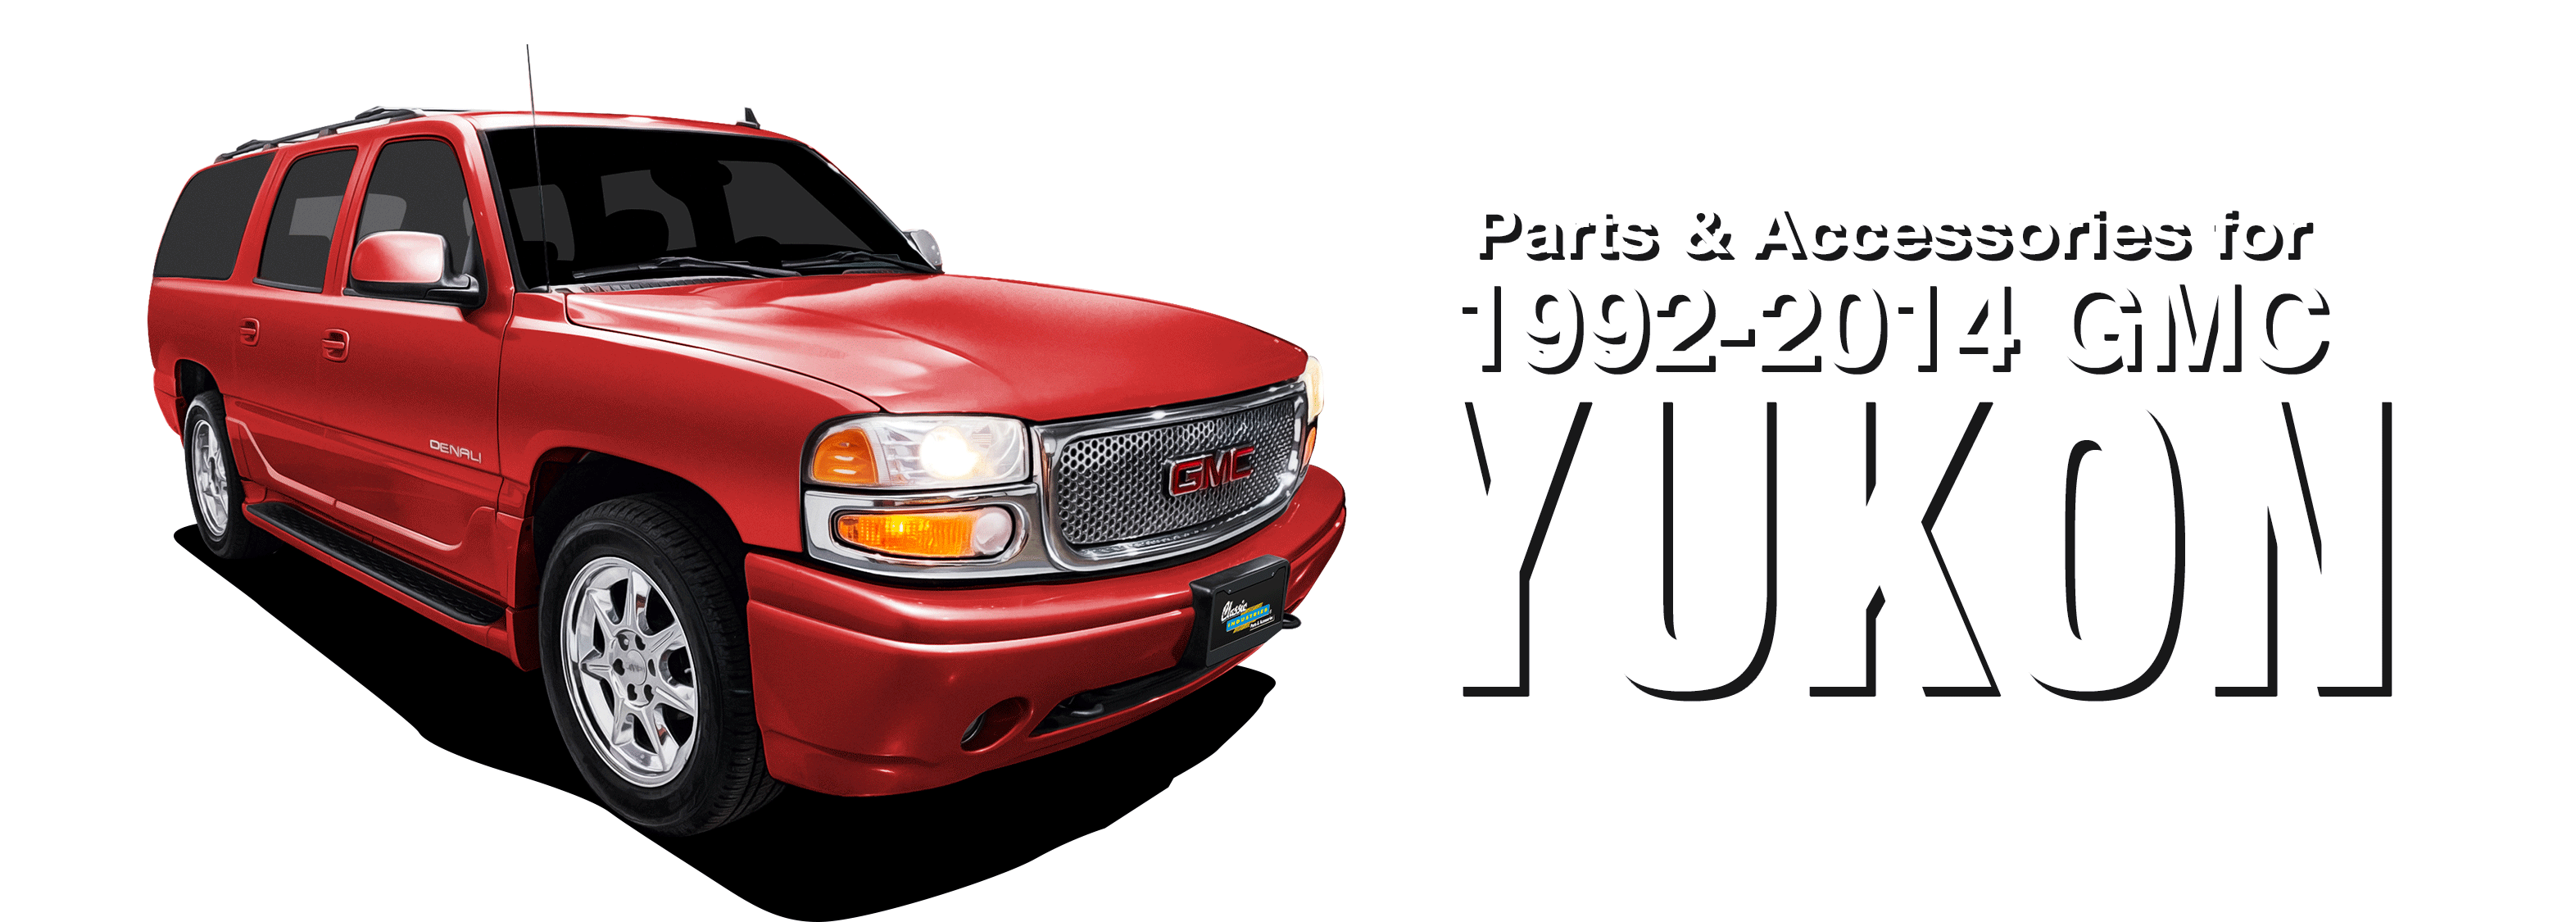 Parts & Accessories for 1992-2014 GMC Yukon